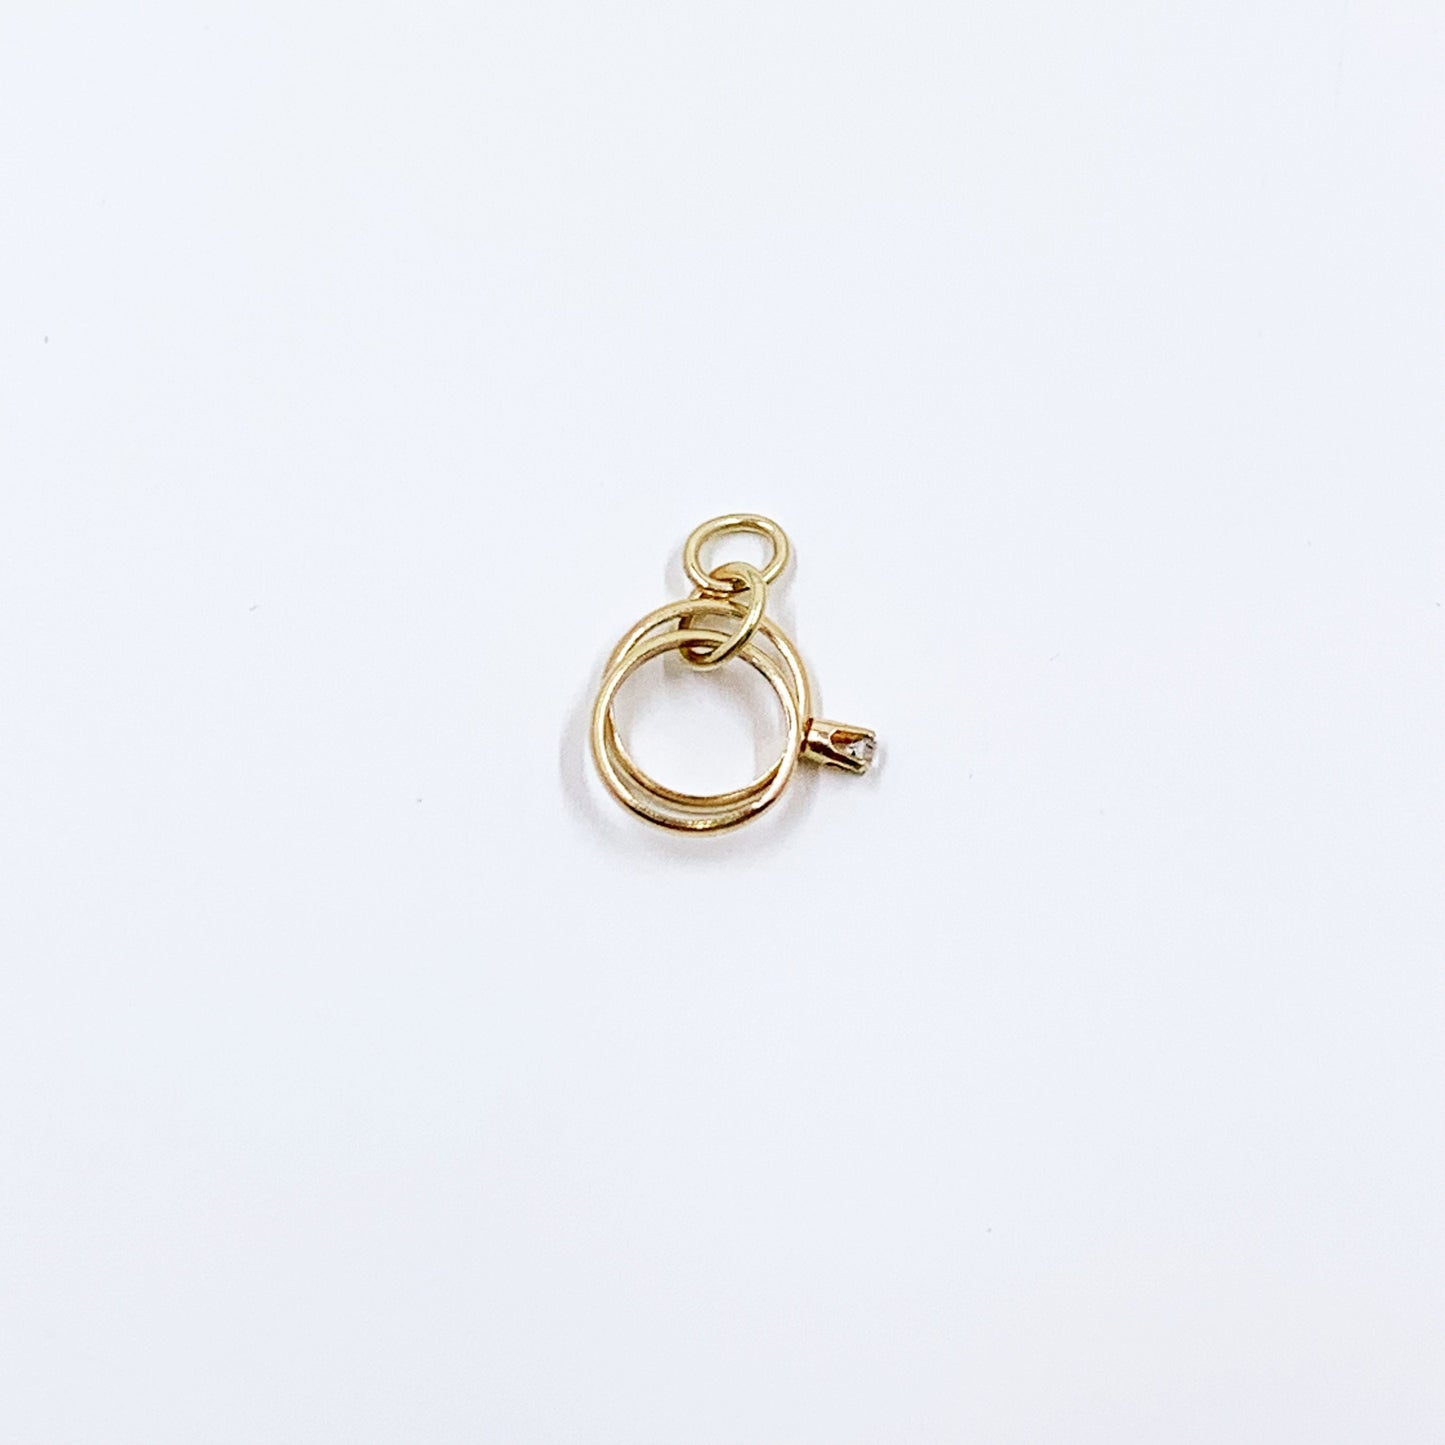 Vintage 14k Gold Tiny Wedding Rings Charm | Miniature Rings Charm | 14K Solitaire Ring and Wedding Band Mini Charm